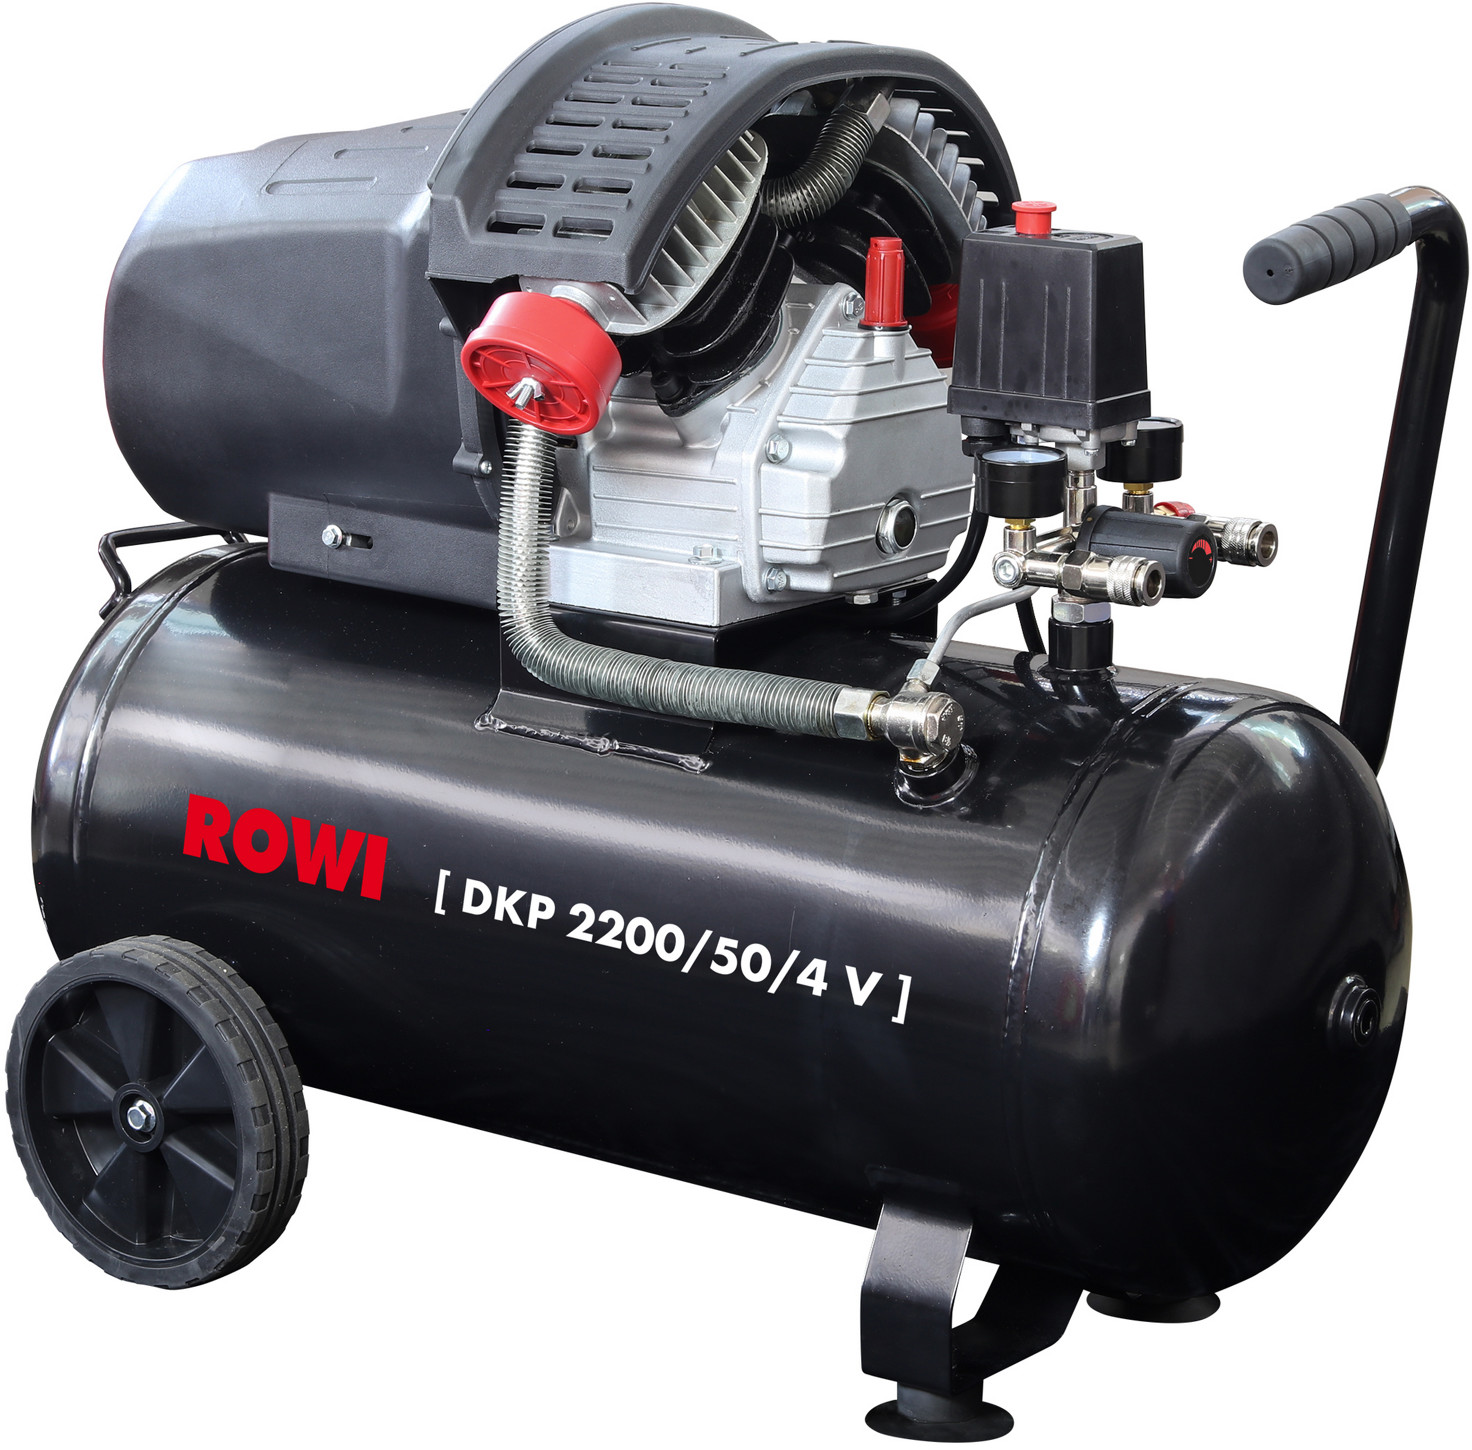 Rowi DKP 2200/50/4 V ab | Preisvergleich 261,99 € bei